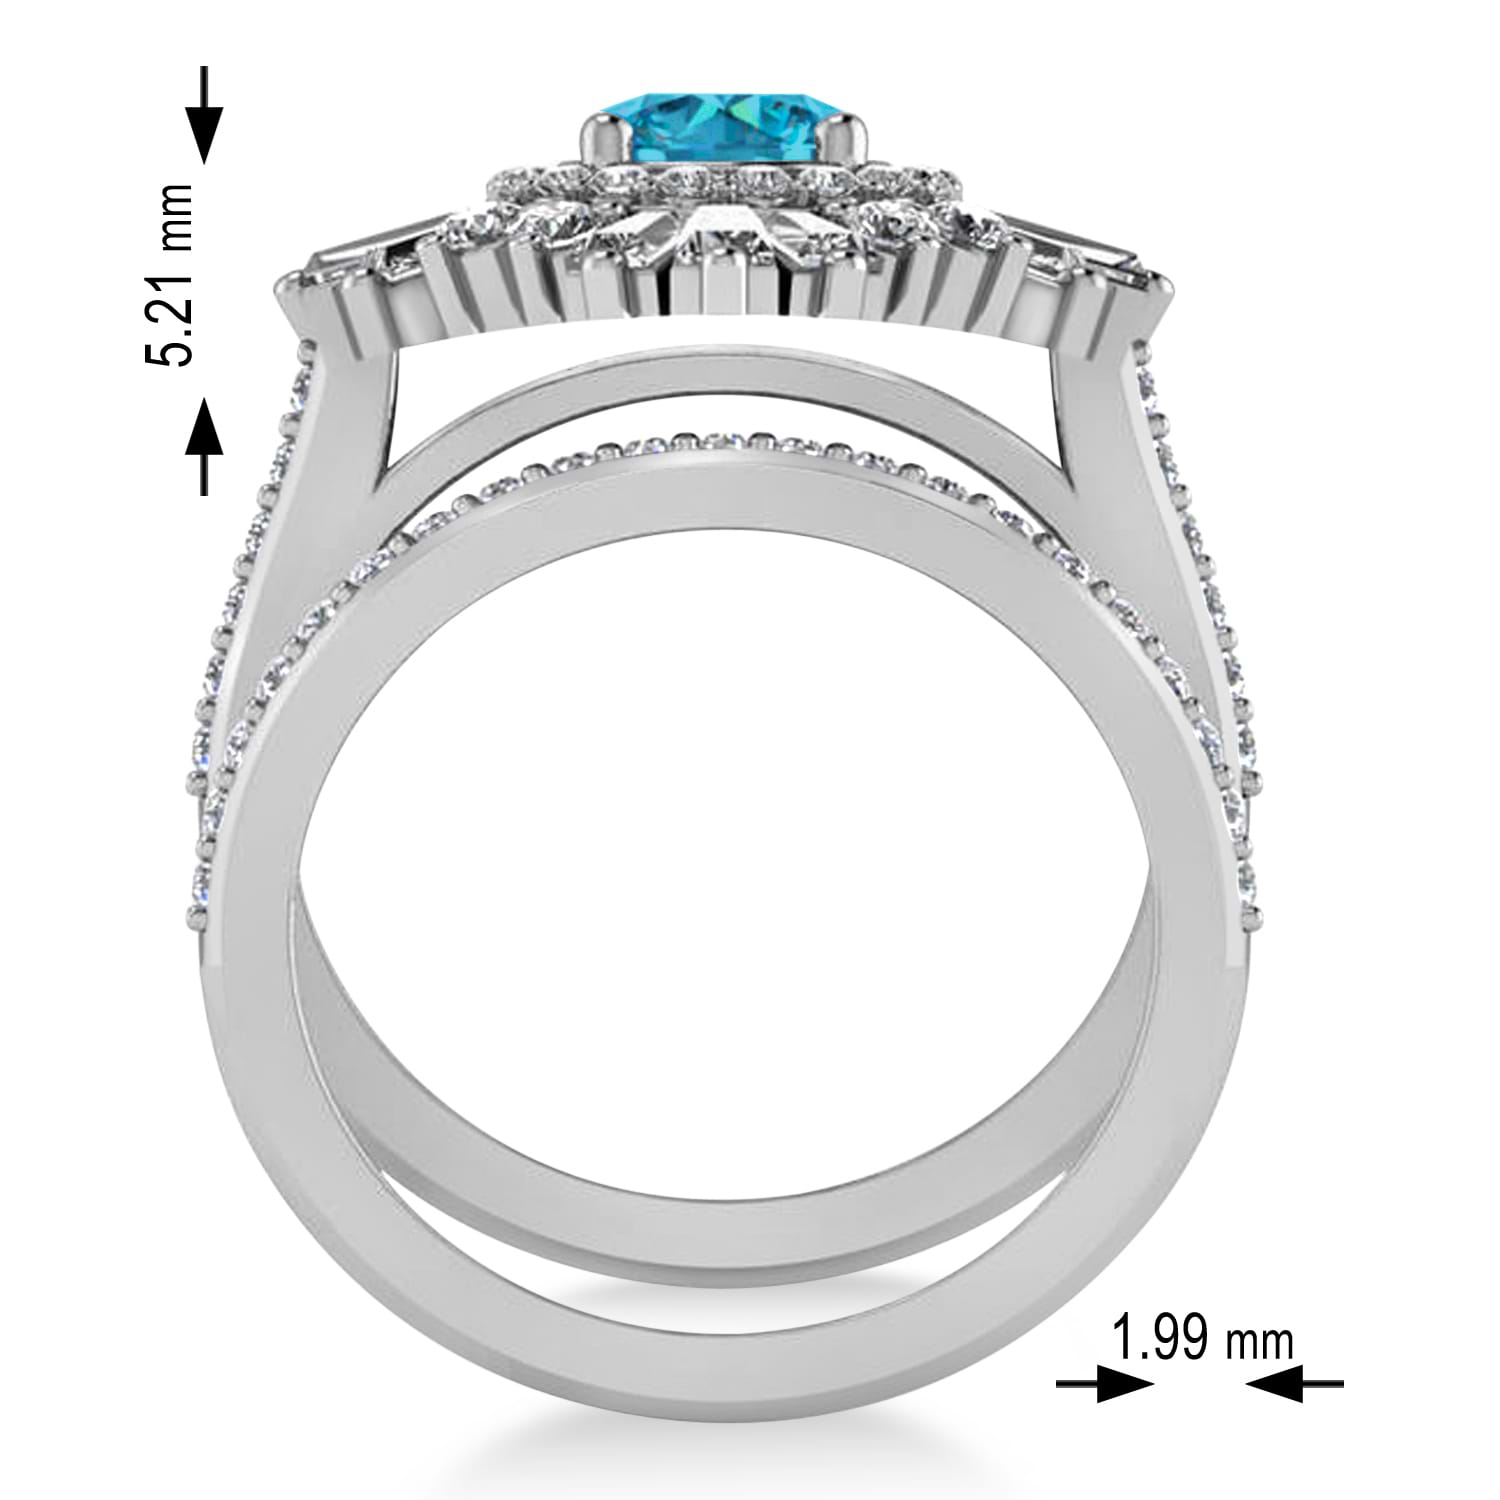 Blue Diamond & Diamond Ballerina Engagement Ring Palladium (2.74 ctw)